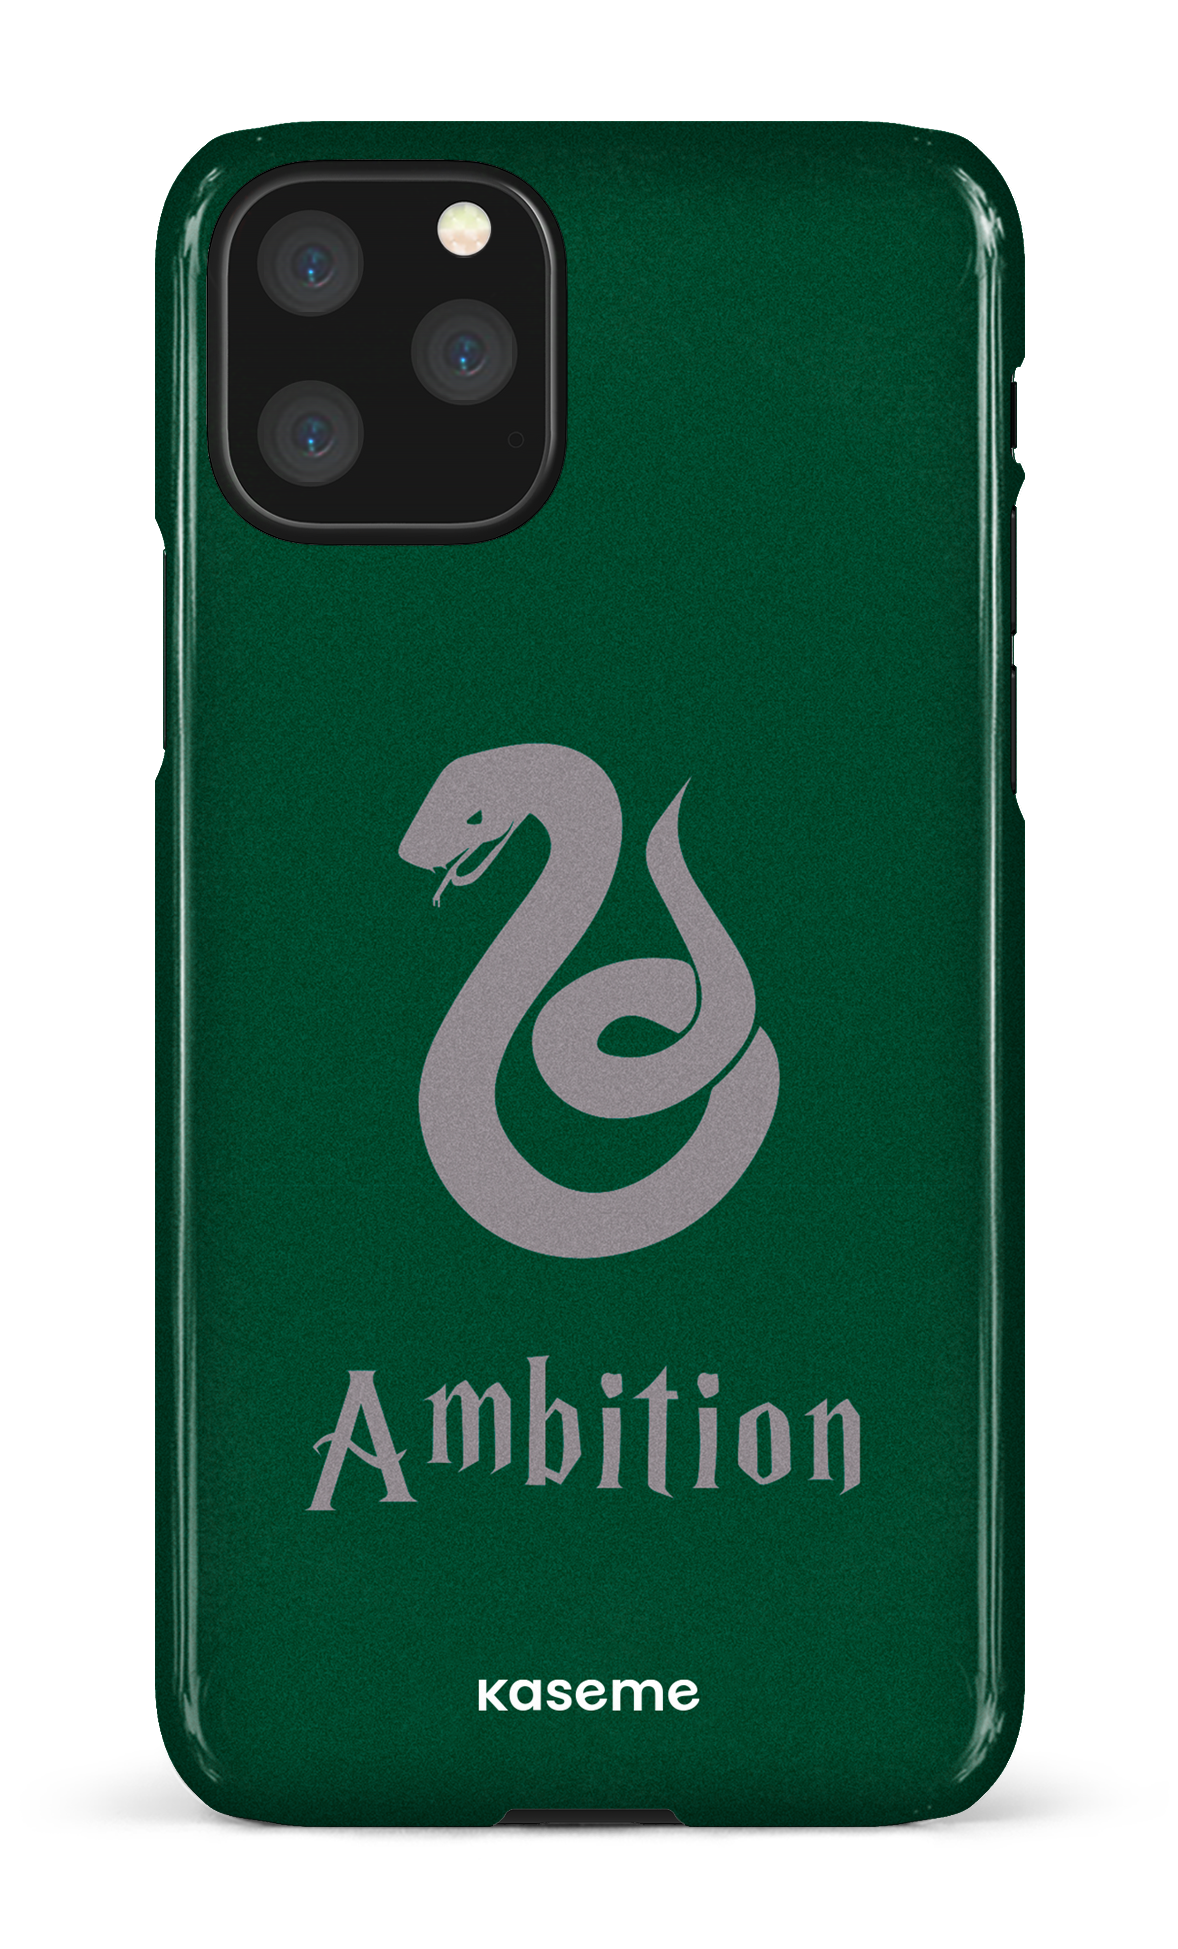 Ambition - iPhone 11 Pro